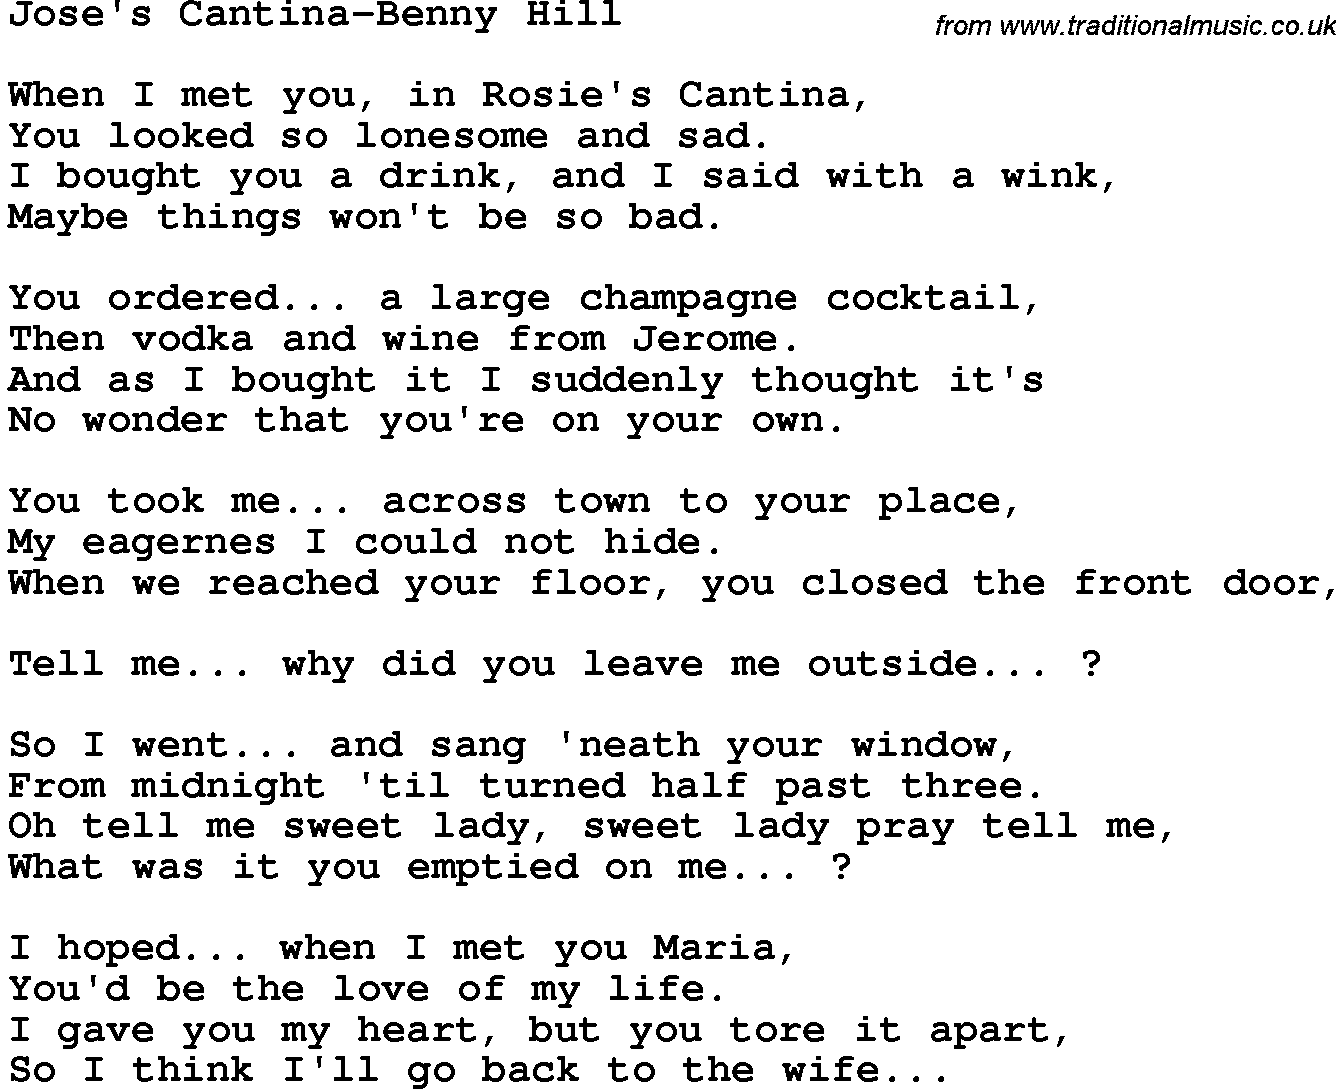 Novelty song: Jose's Cantina-Benny Hill lyrics